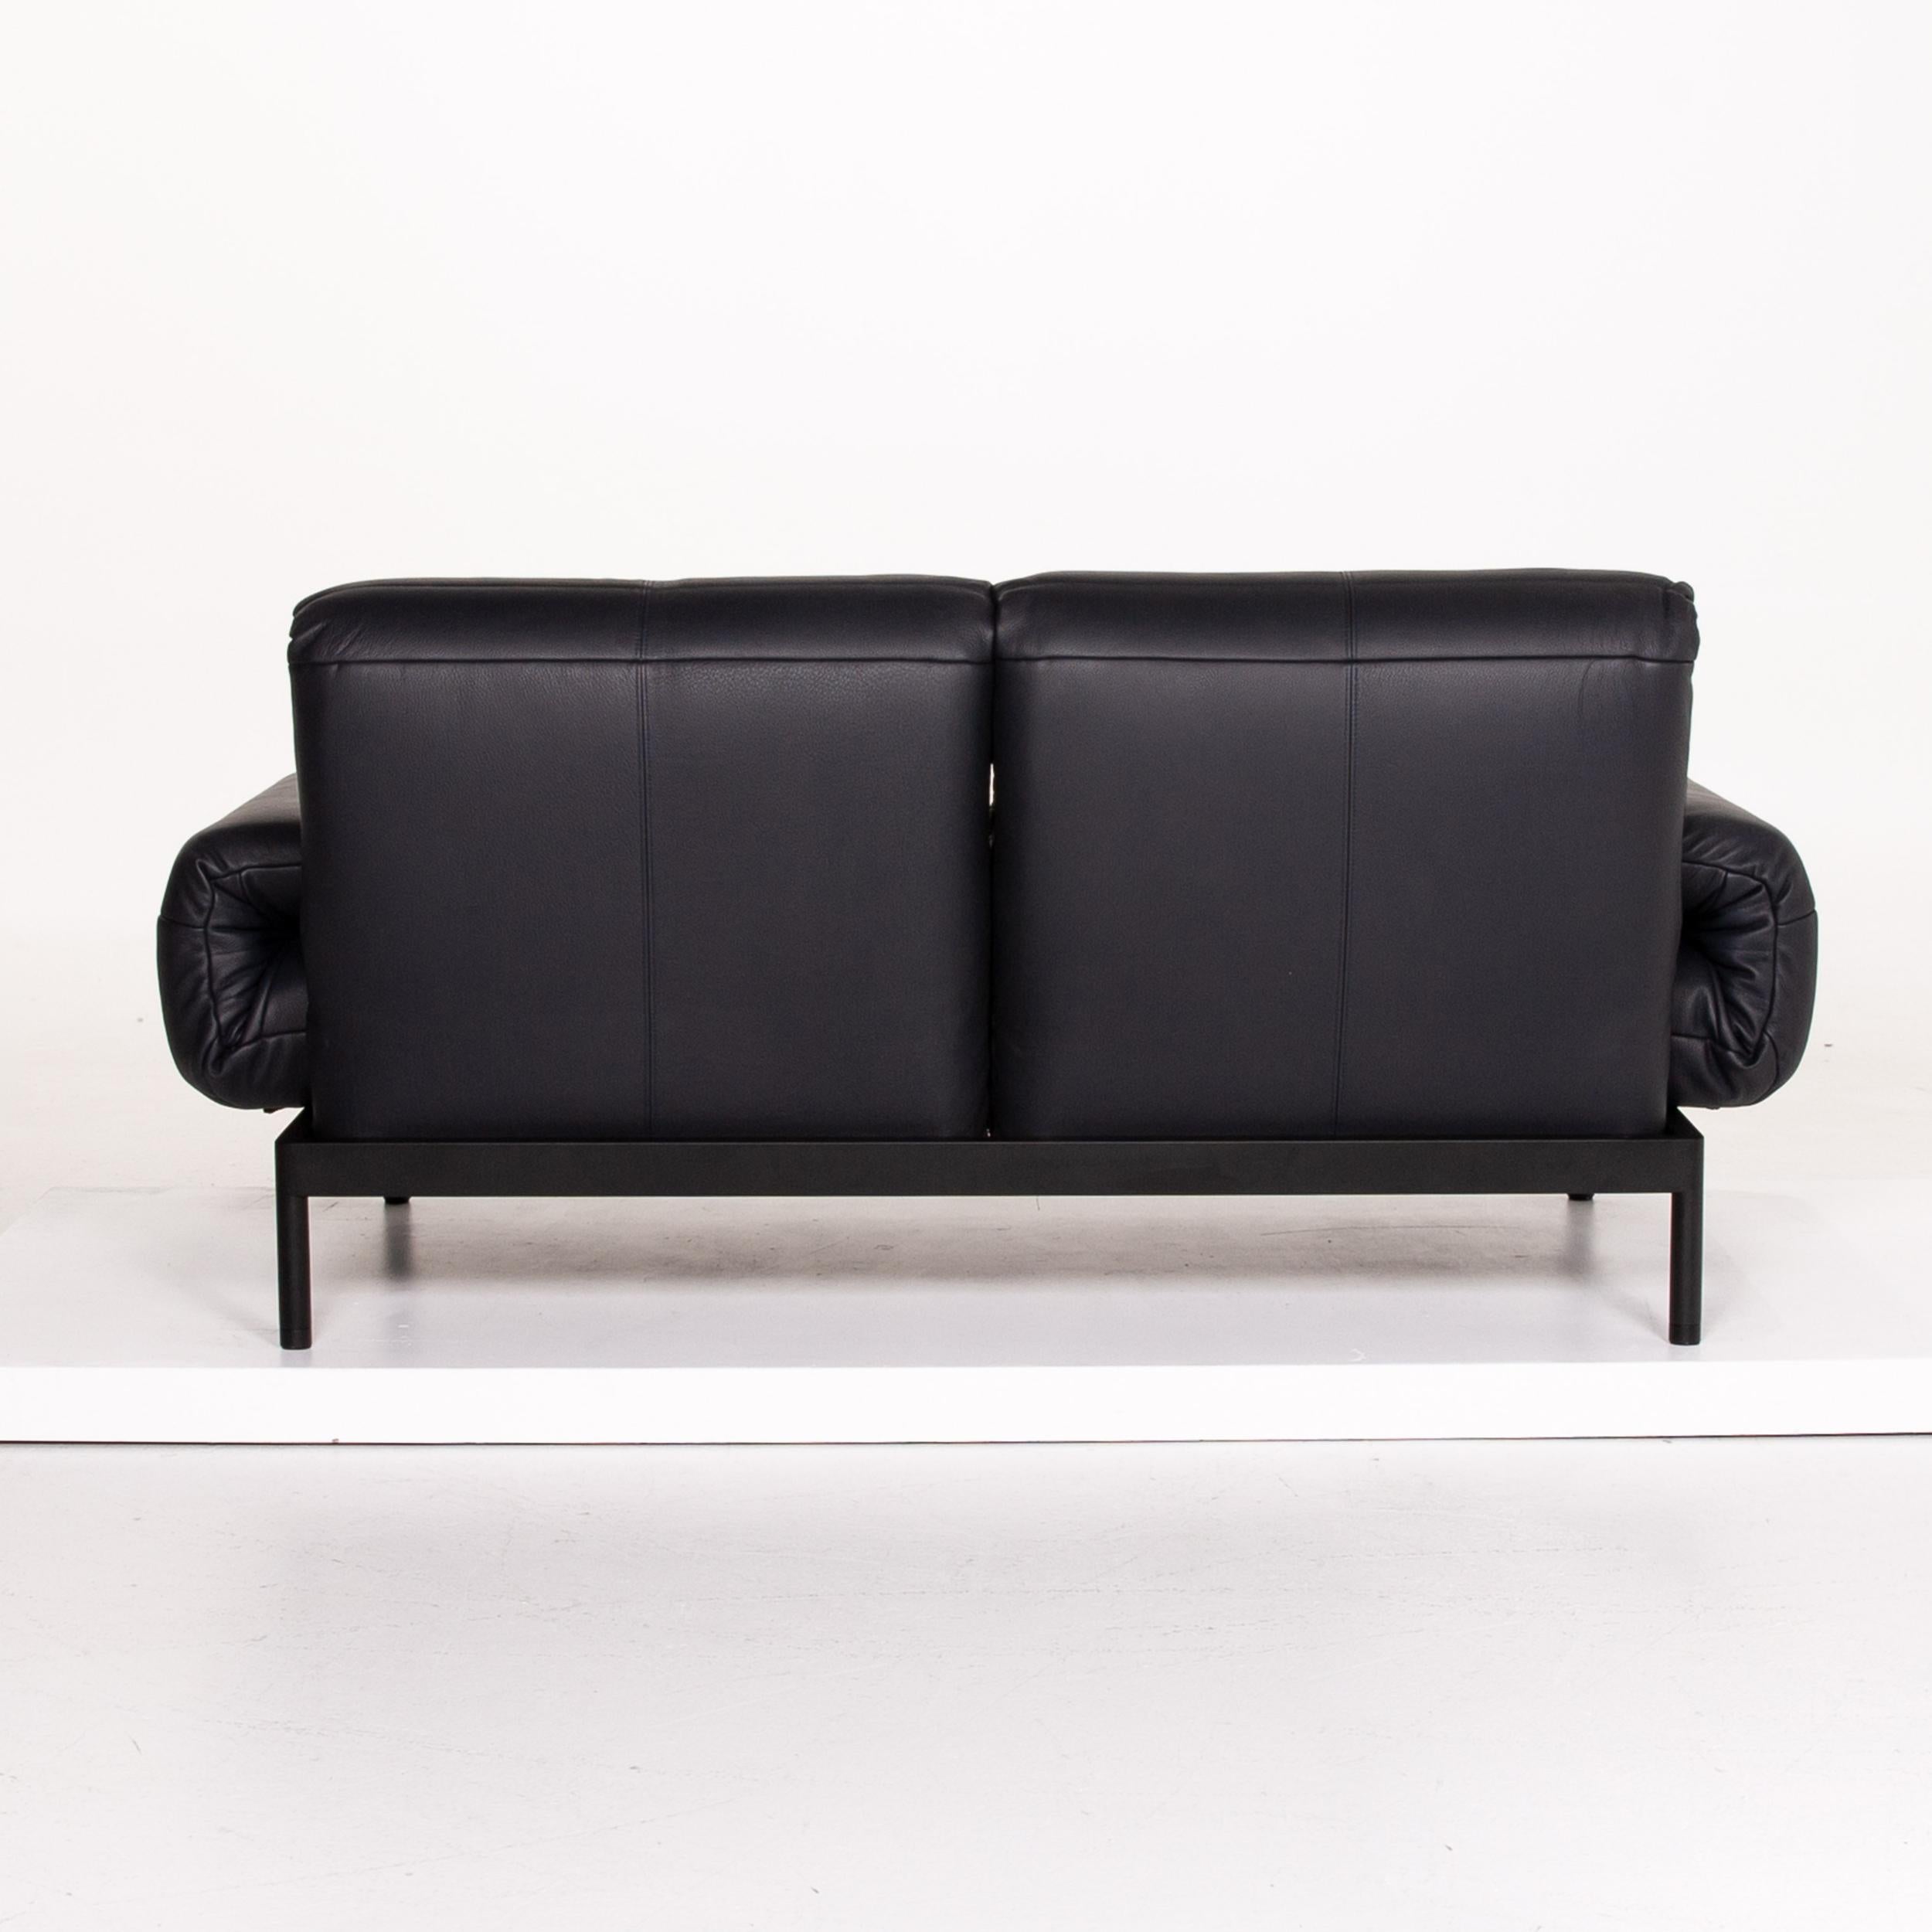 Rolf Benz Plura Leather Sofa Dark Blue Blue Two-Seat Function Sofa Bed Sleep 6